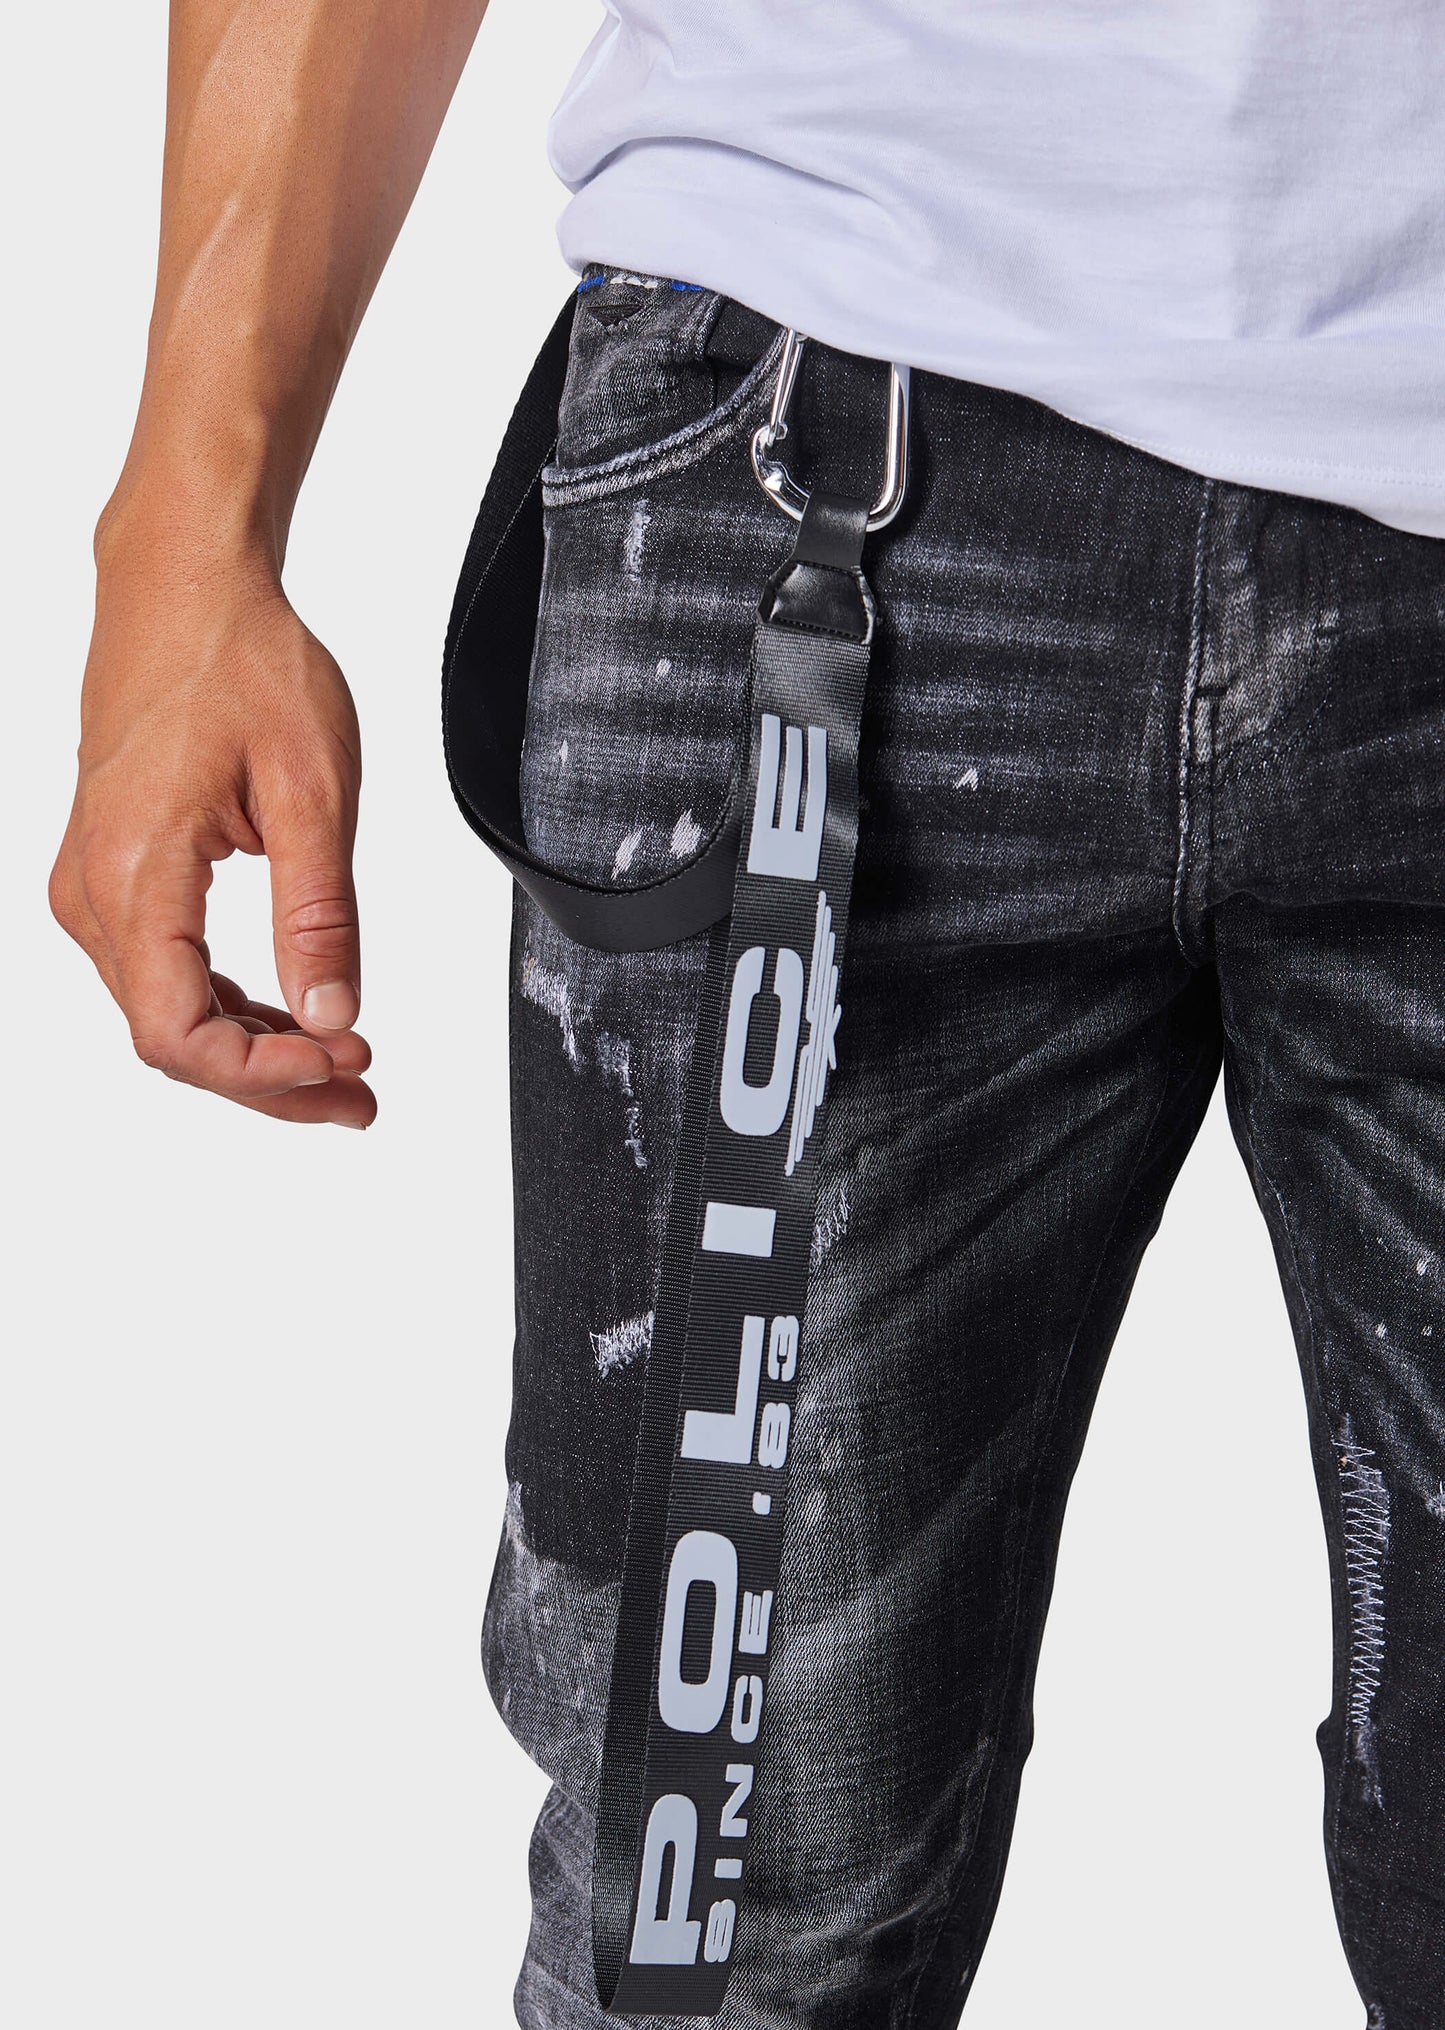 Deniro LAT 880 Slim Fit Jeans